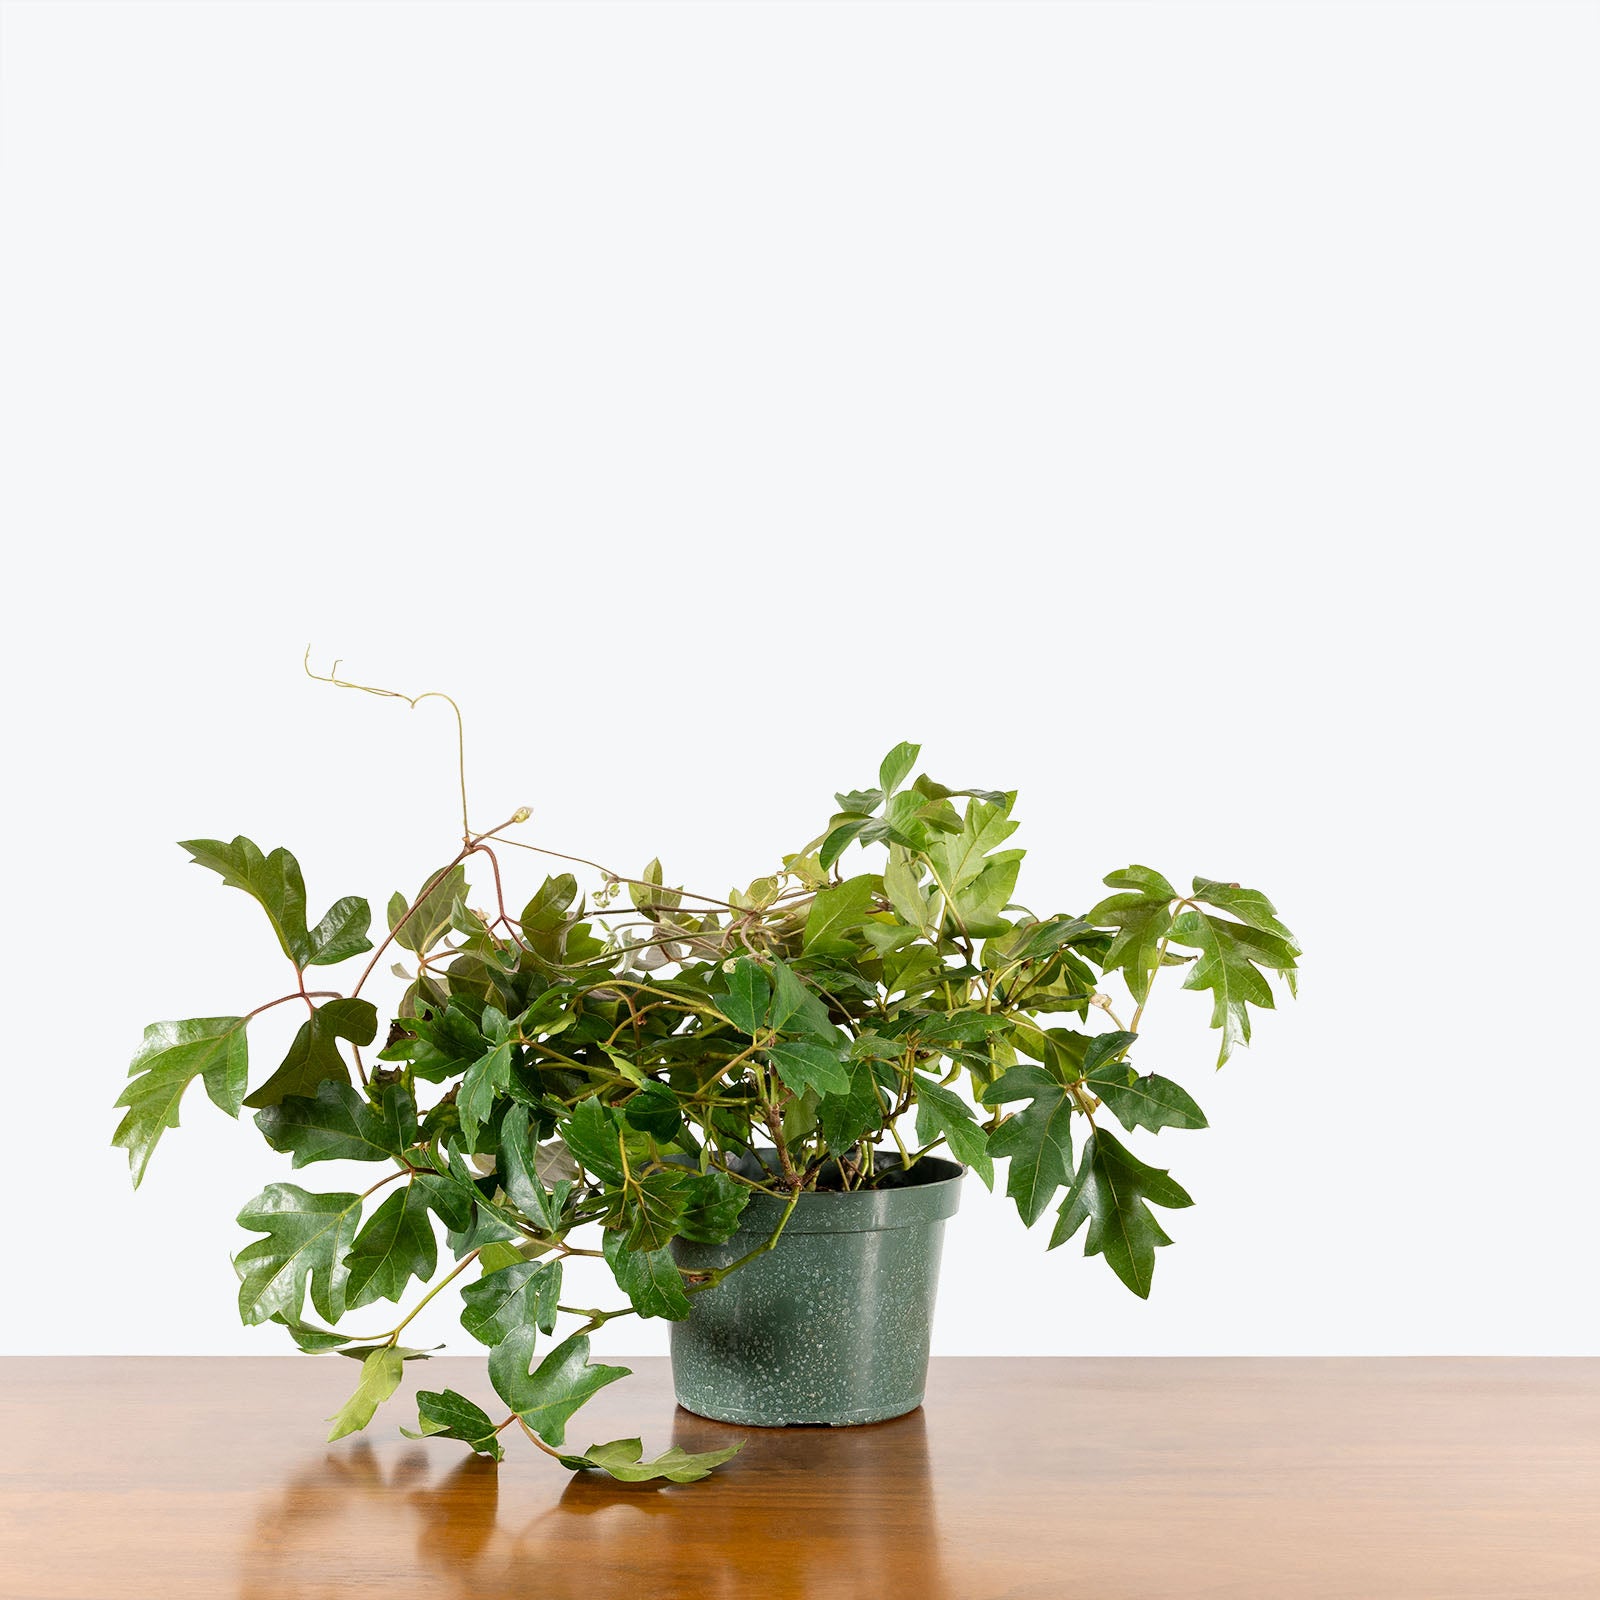 Oak Leaf Ivy - Cissus rhombifolia 'Ellen Danica' | Care Guide and Pro Tips - JOMO Studio